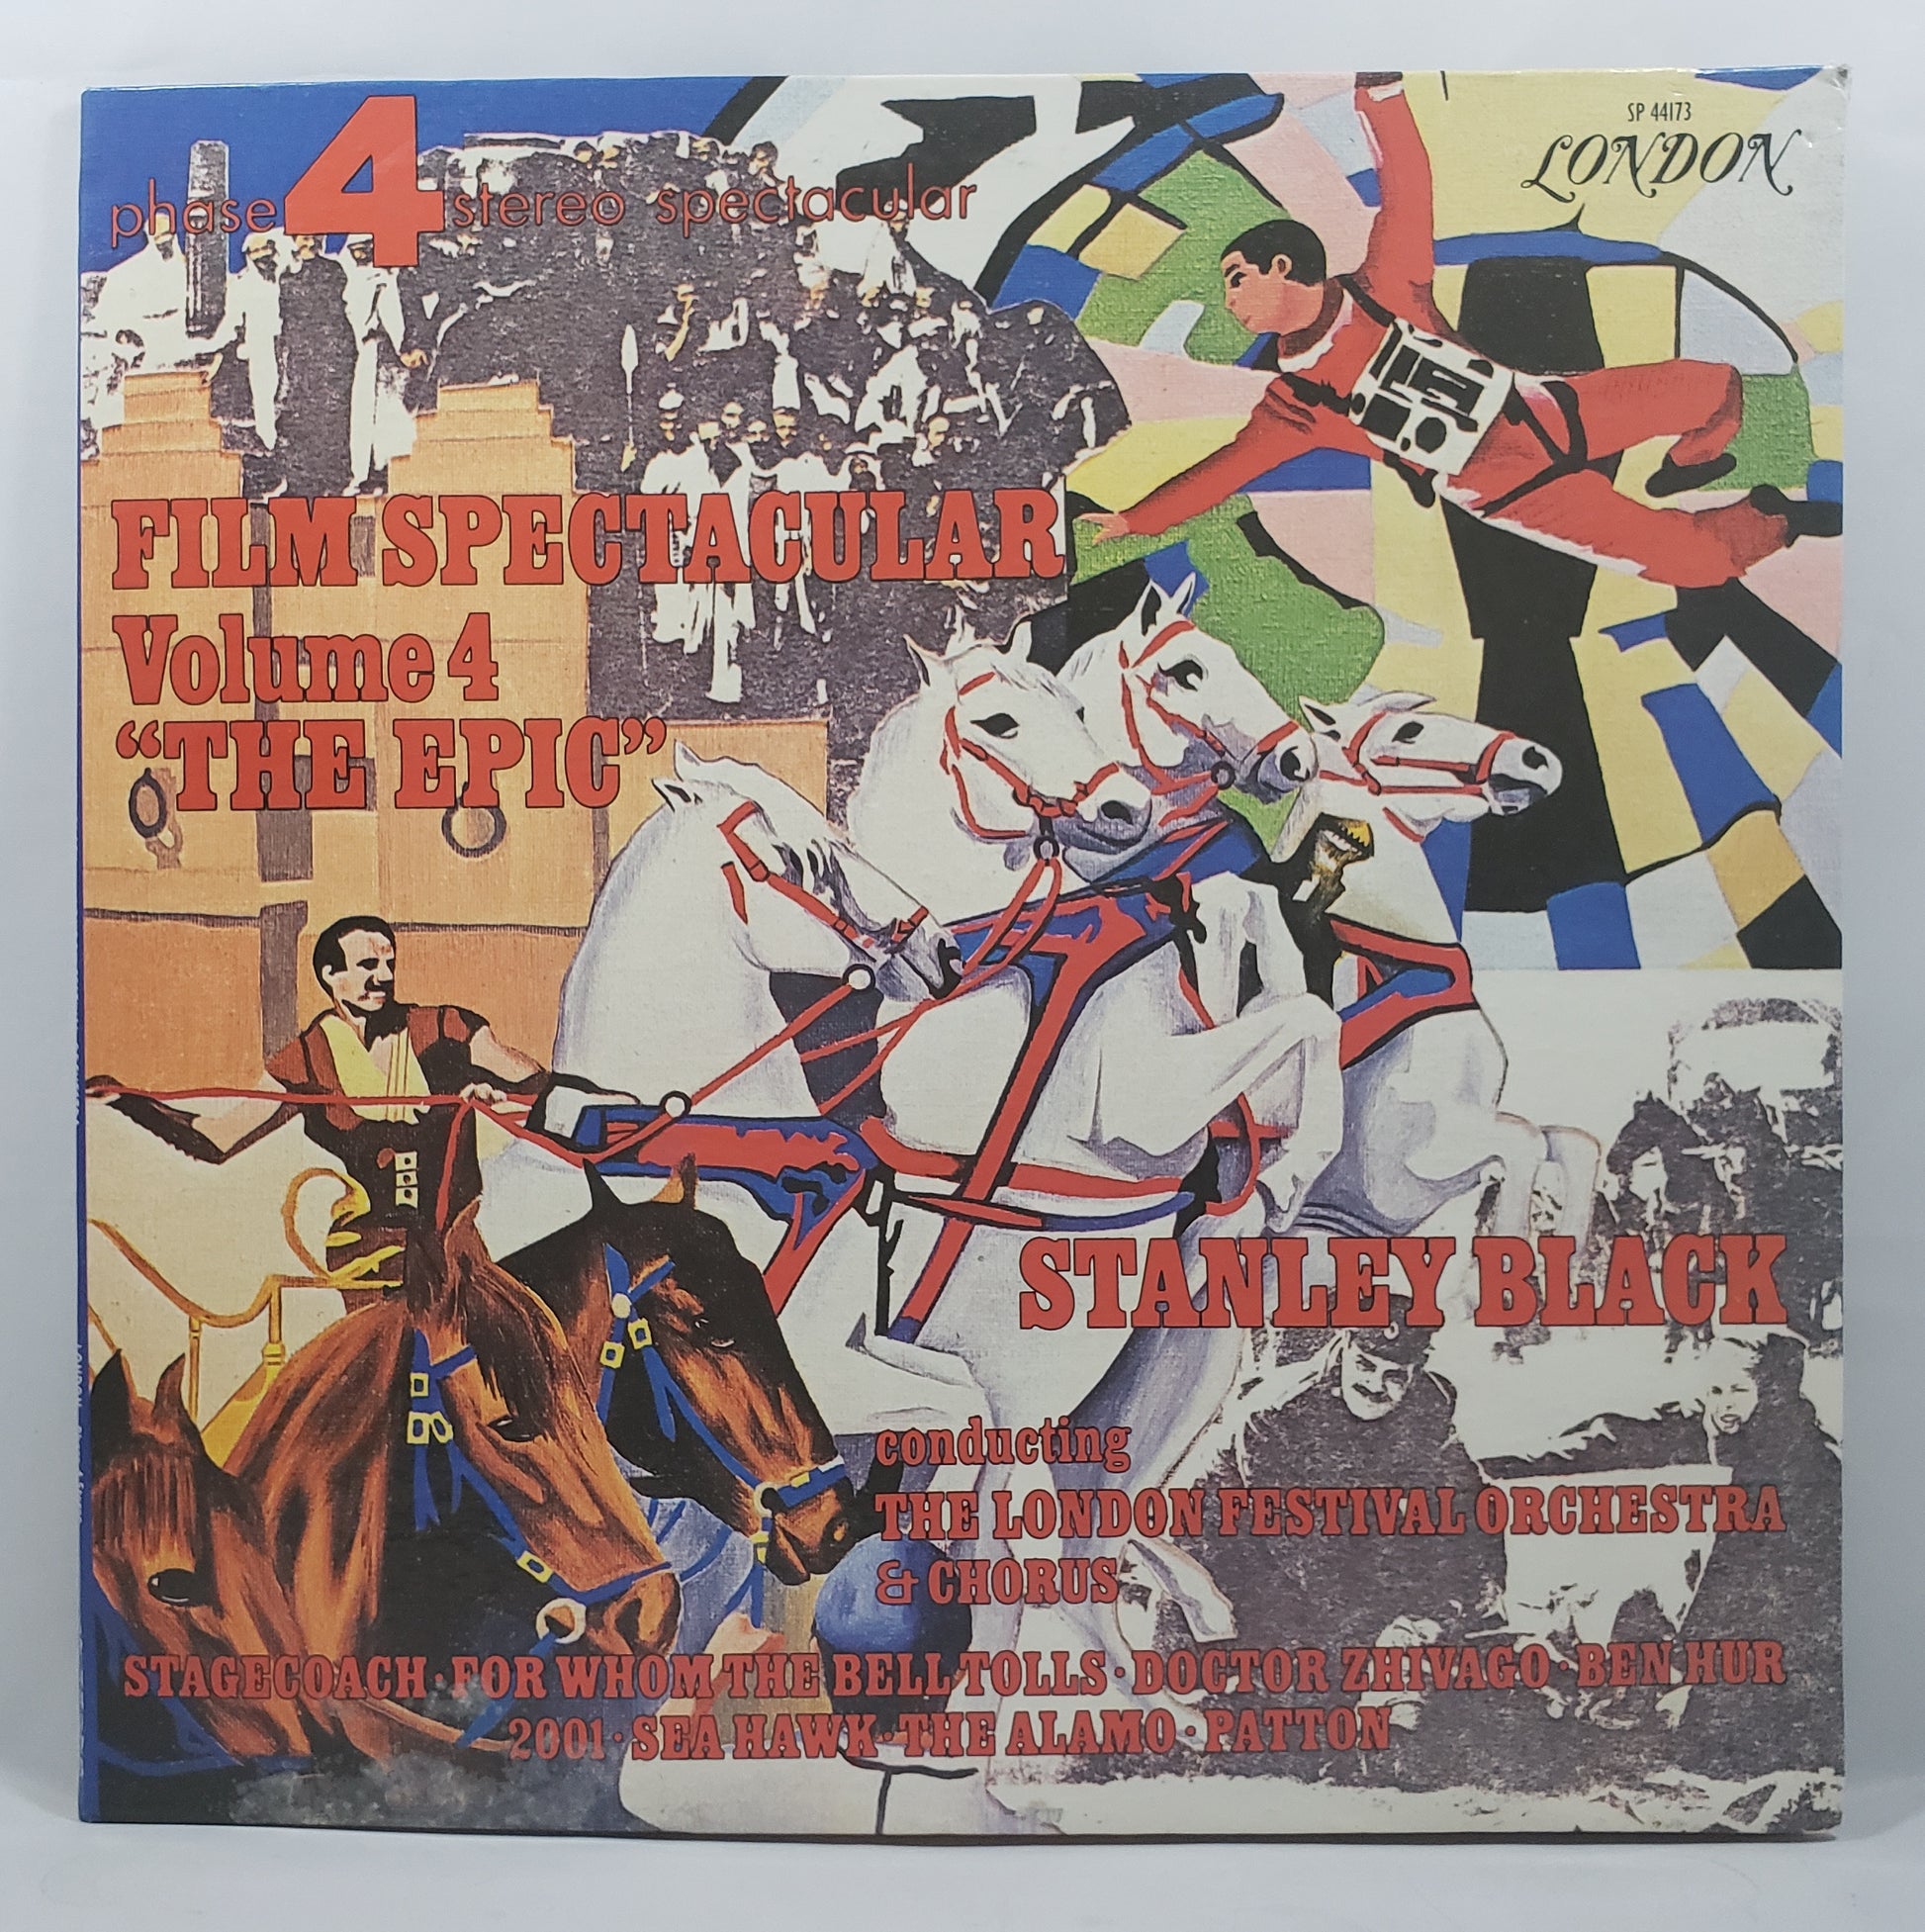 Stanley Black - Film Spectacular Volume 4 "The Epic" [1972 Used Vinyl Record LP]